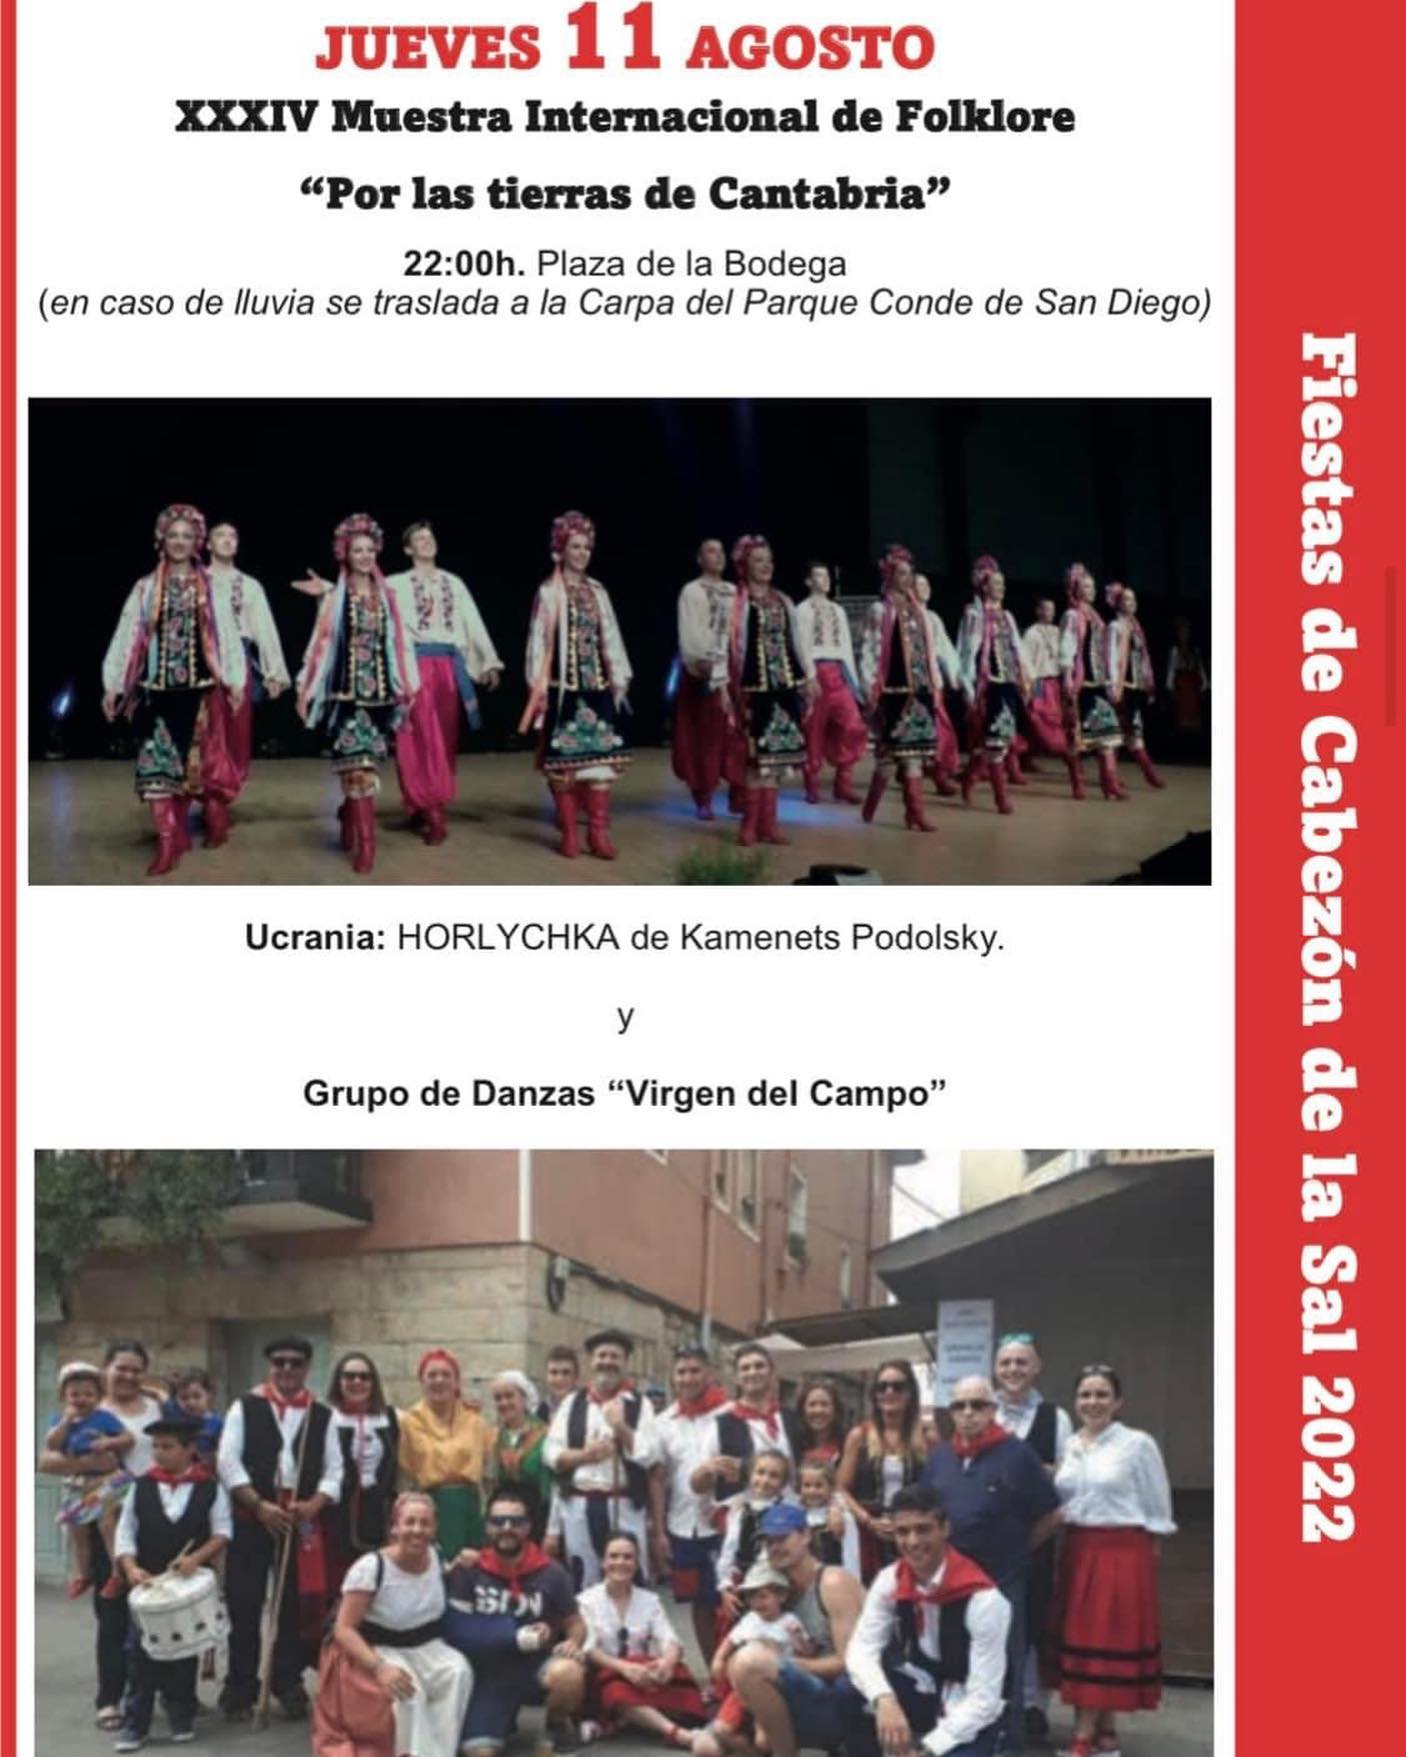 XXXIV Muestra Internacional de Folklore 

📅 11 de Agosto

⏰ 22:00h

📍Plaza Ángel de la Bodega 

#salencabezon #cabezondelasalenfiestas #cabezondelasal #turismocabezondelasal #cantabriainfinita